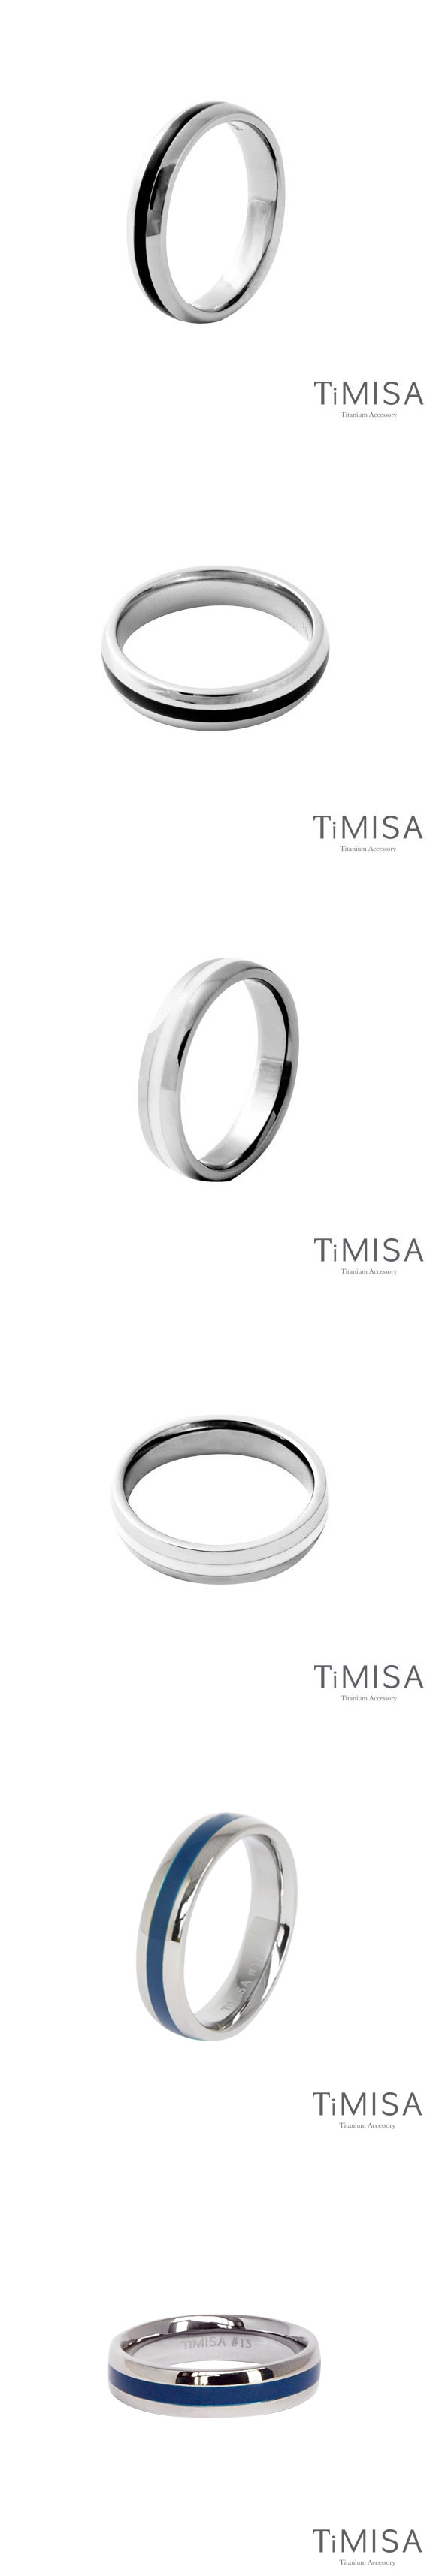 TiMISA《真愛宣言》純鈦戒指(三色可選)